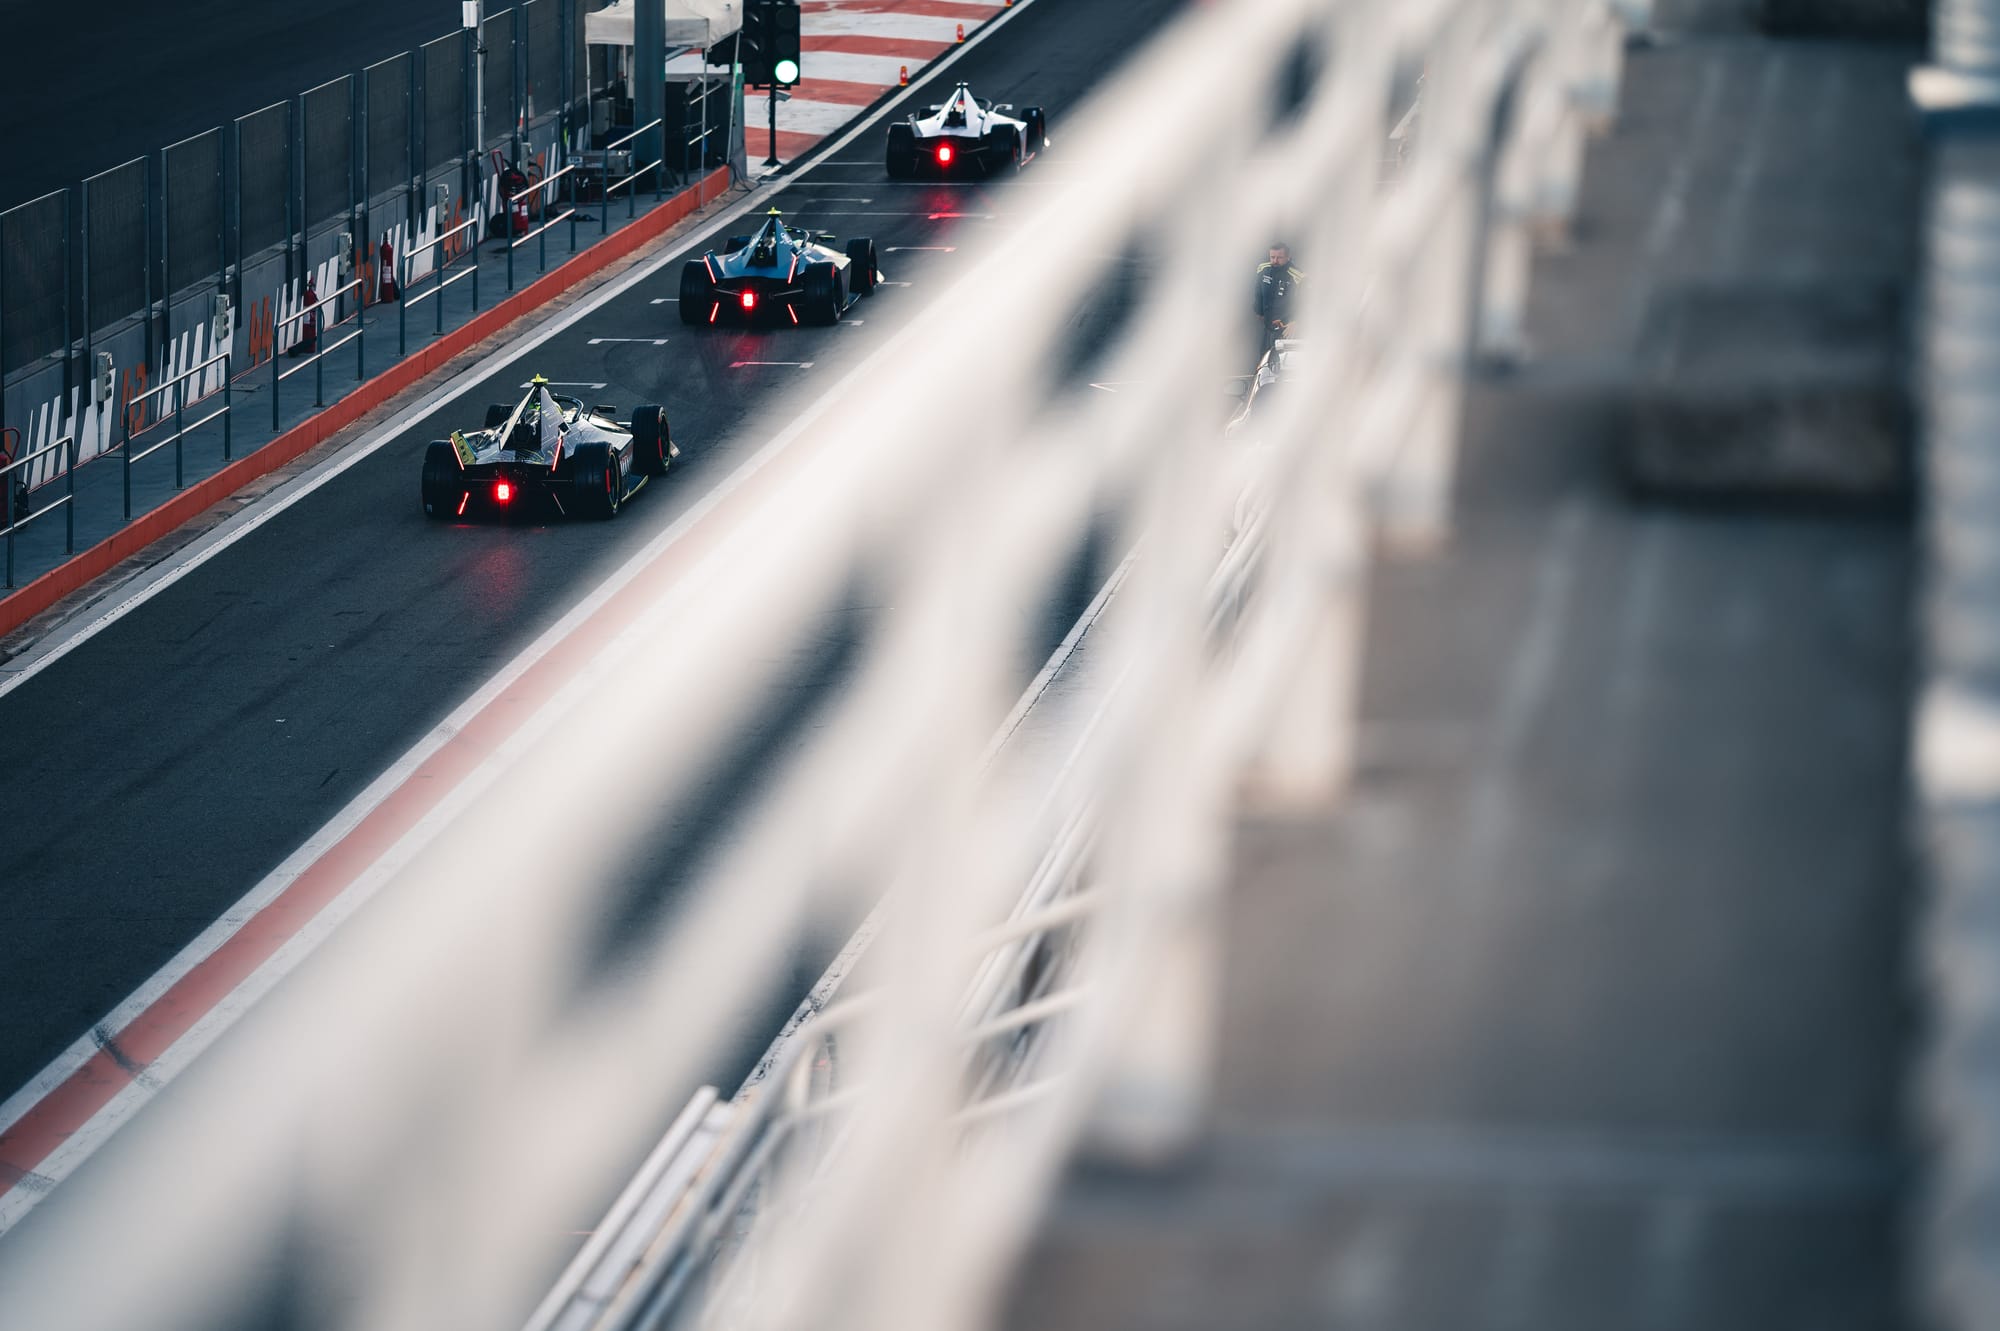 Surprise new battery provider expected for Formula E's Gen4 era - The Race